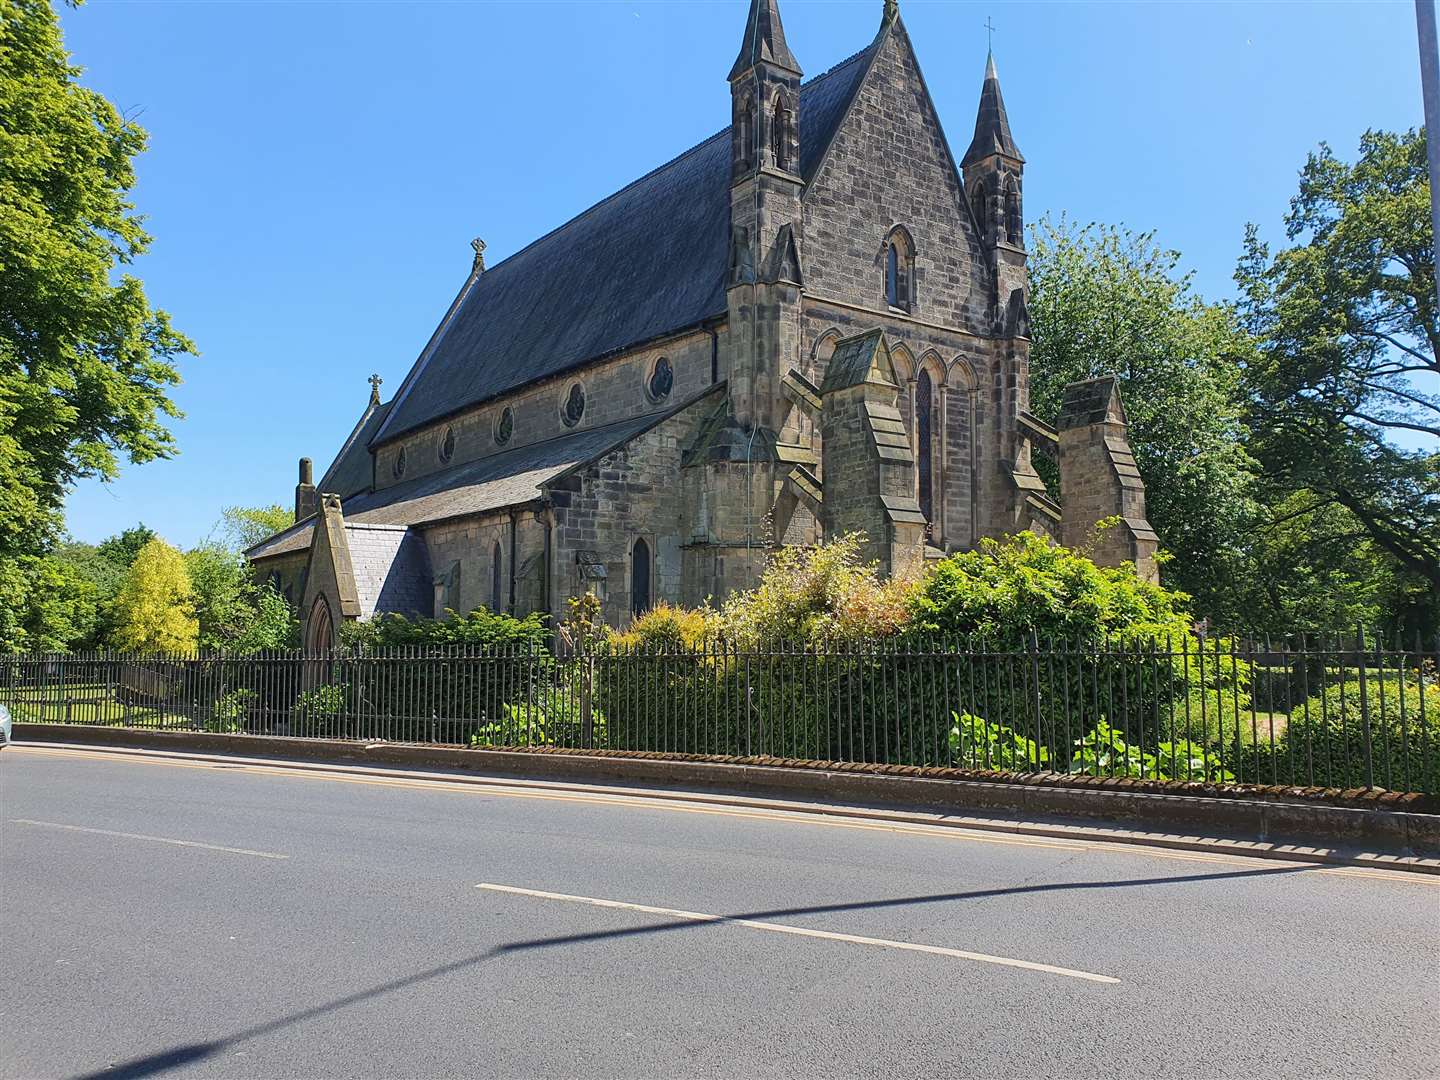 St John's Church in King's Lynn